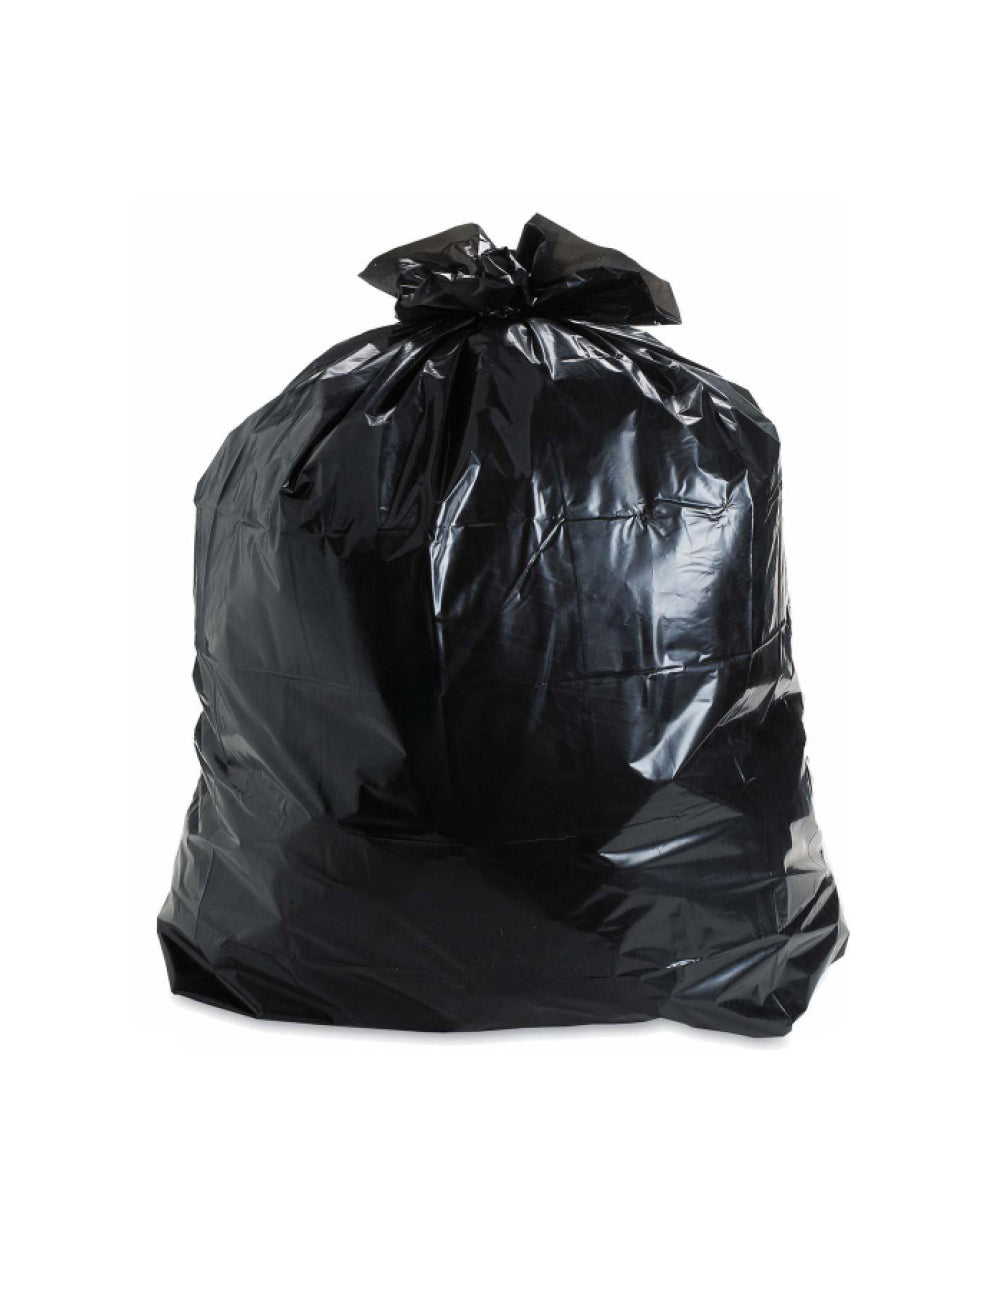 Garbage bags black – Cater Qatar